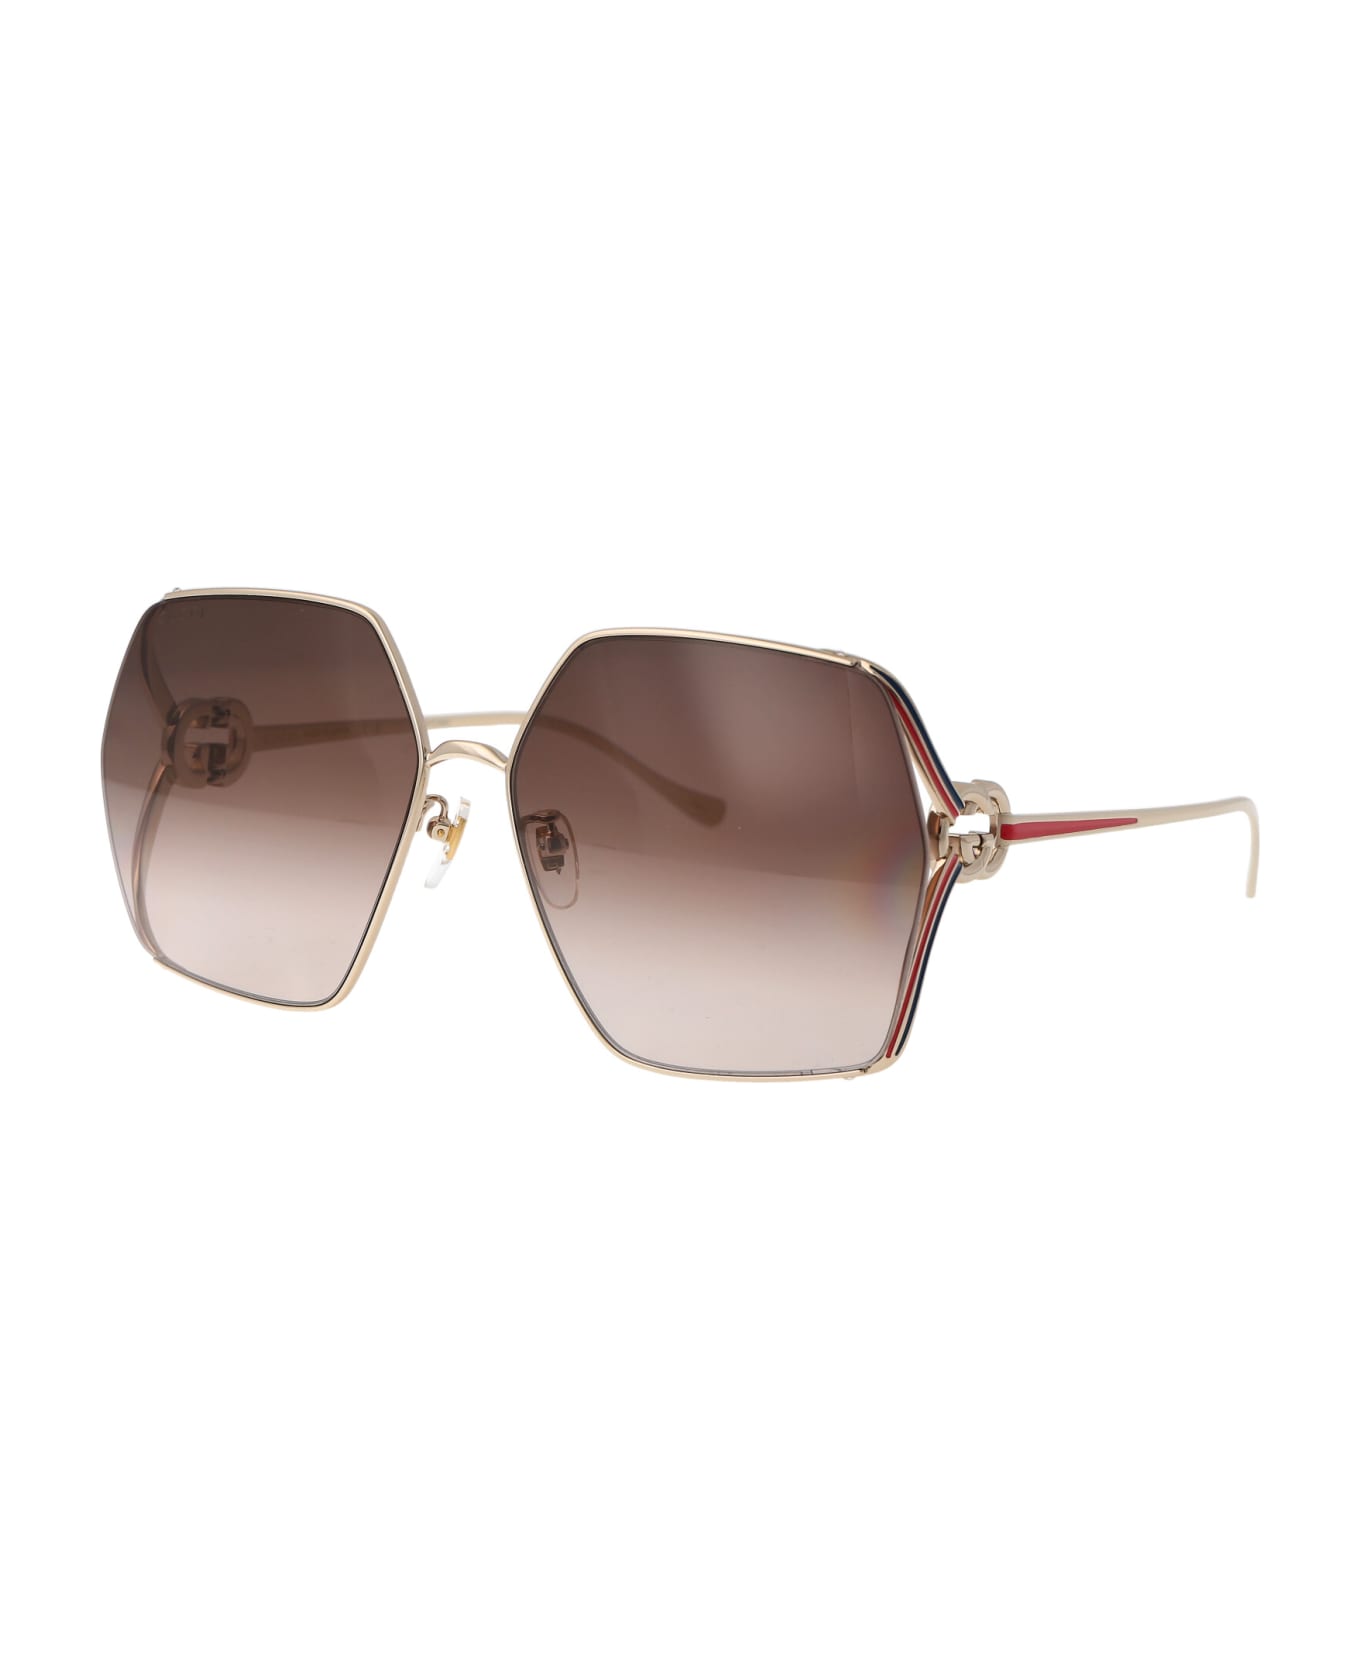 Gucci Eyewear Gg1322sa Sunglasses - 002 GOLD IVORY BROWN